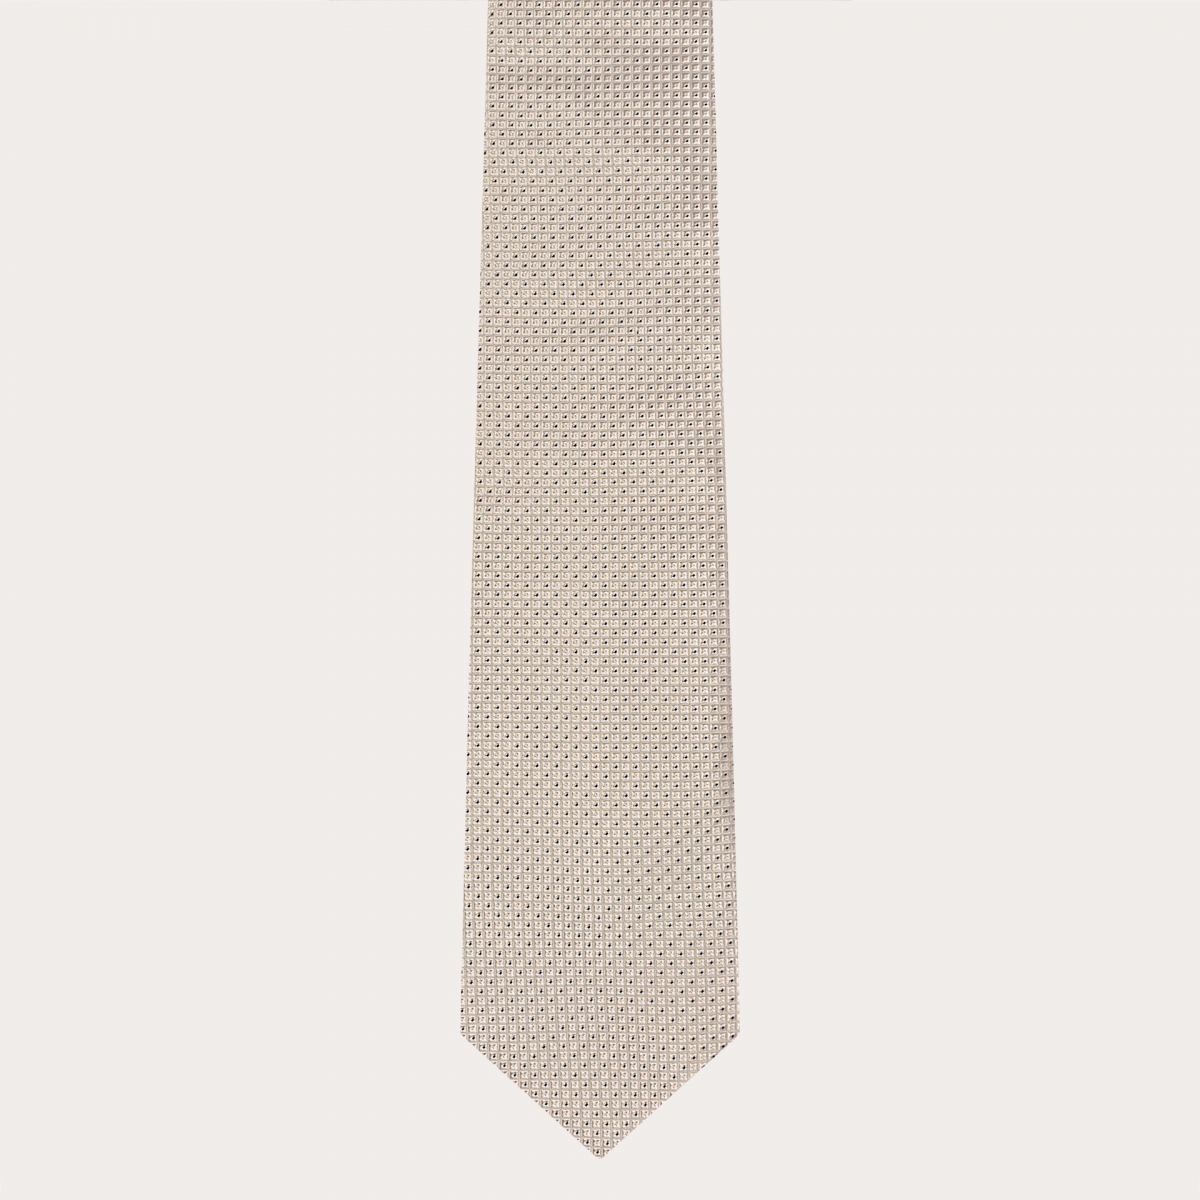 Jacquard silk tie, white ivory with blue micro pattern